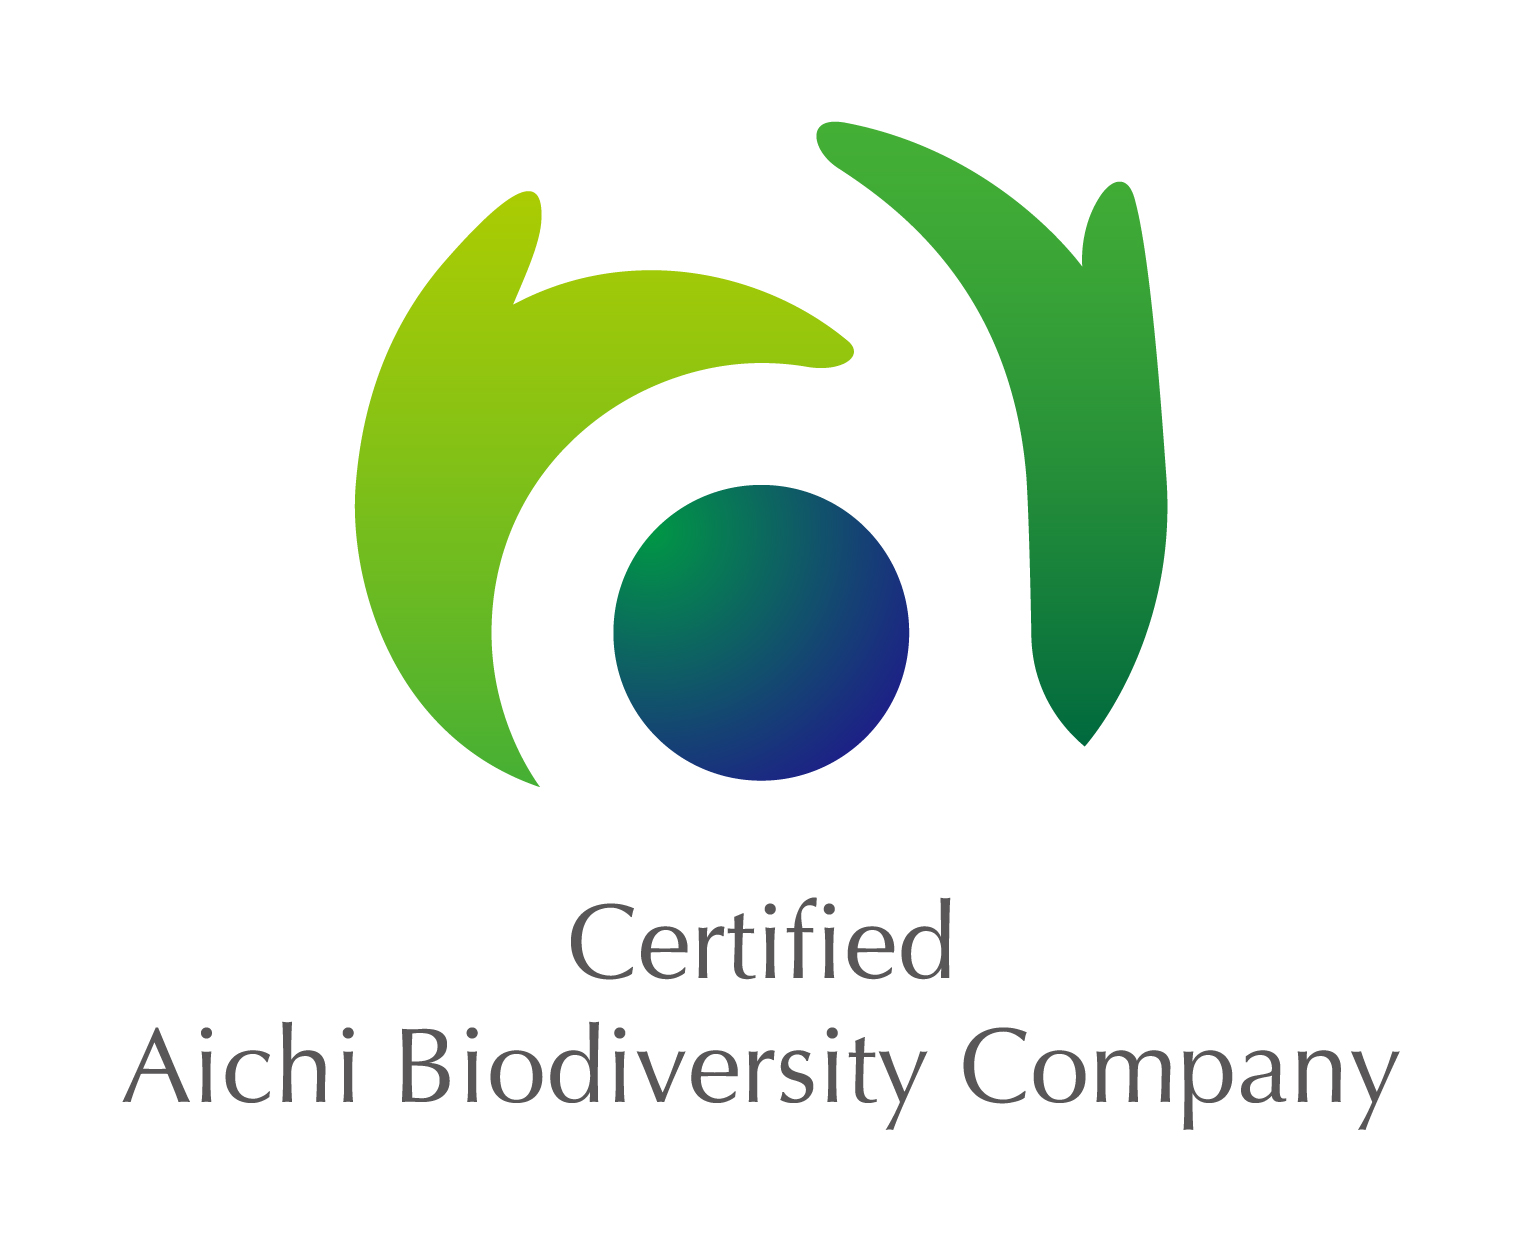 Aichi Biodiversity Company